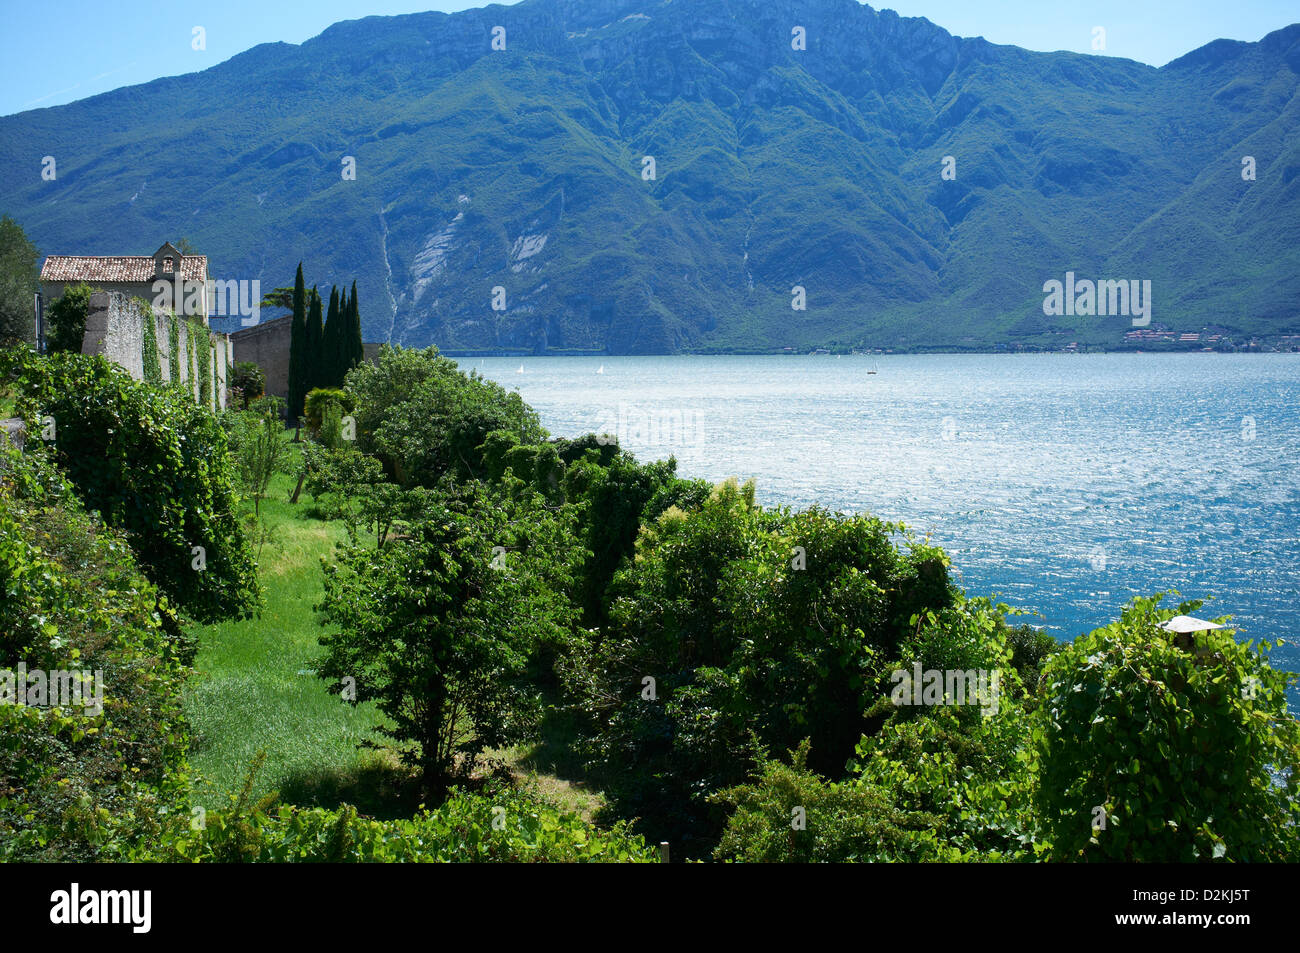 Trees and vegetation around Lake Garda with Monte Baldo in the background, Italy Stock Photo